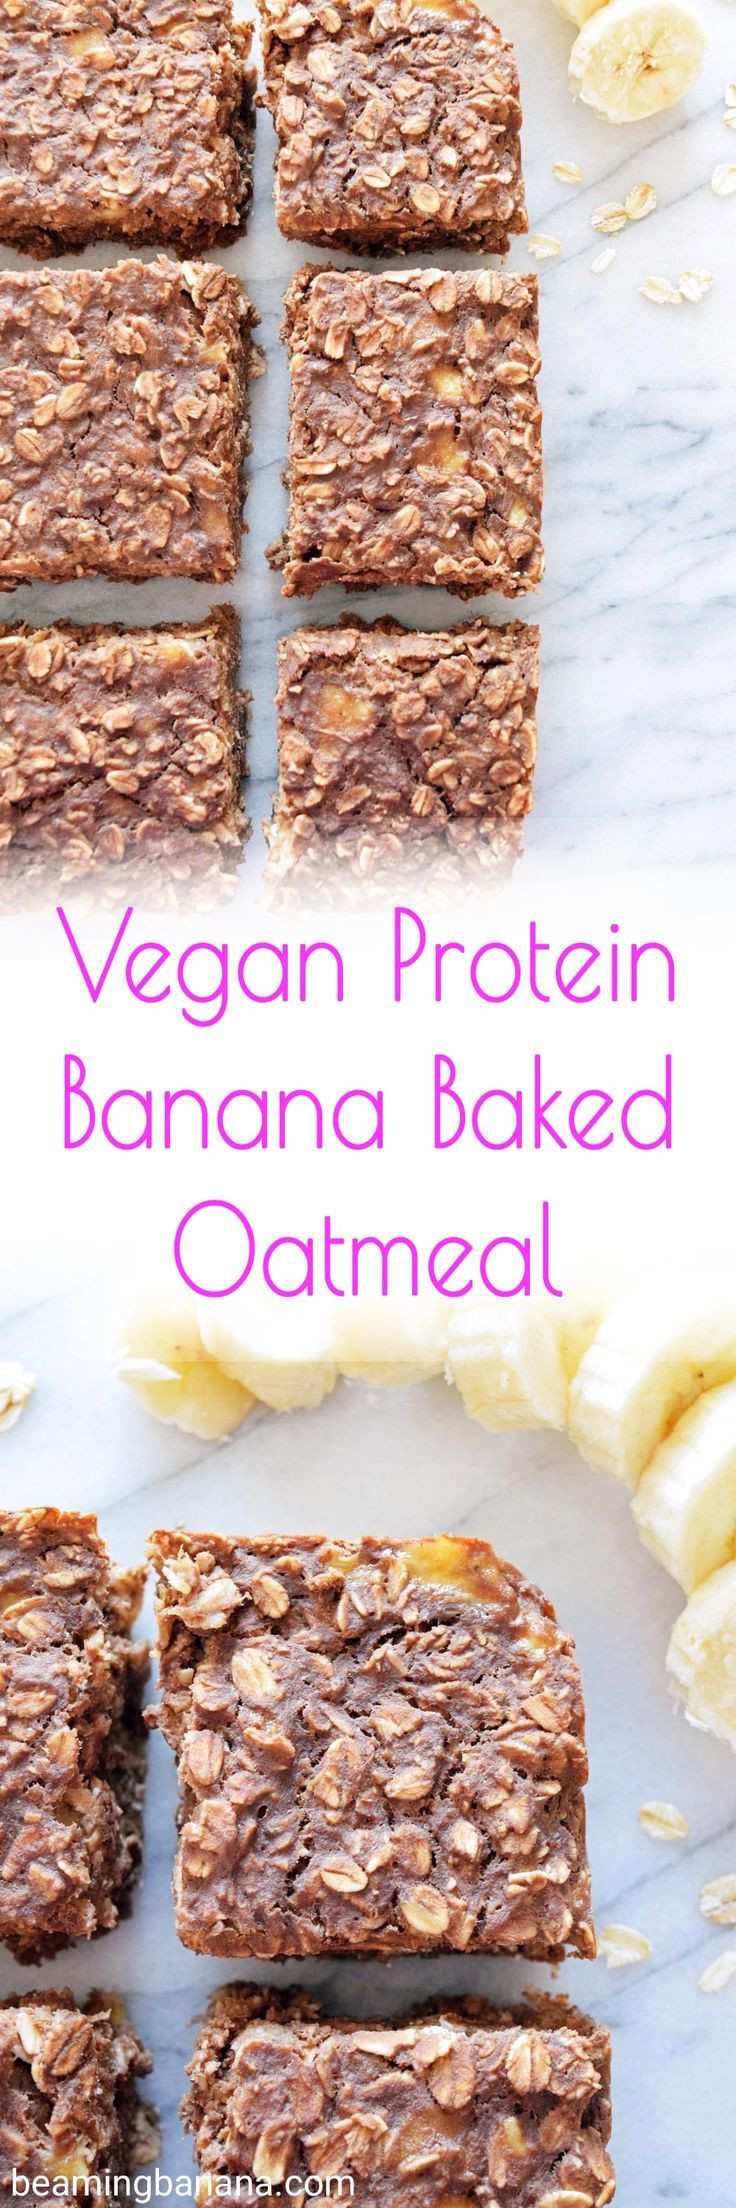 Vegan Protein Baked Oatmeal
 Vegan Protein Banana Baked Oatmeal Recipe